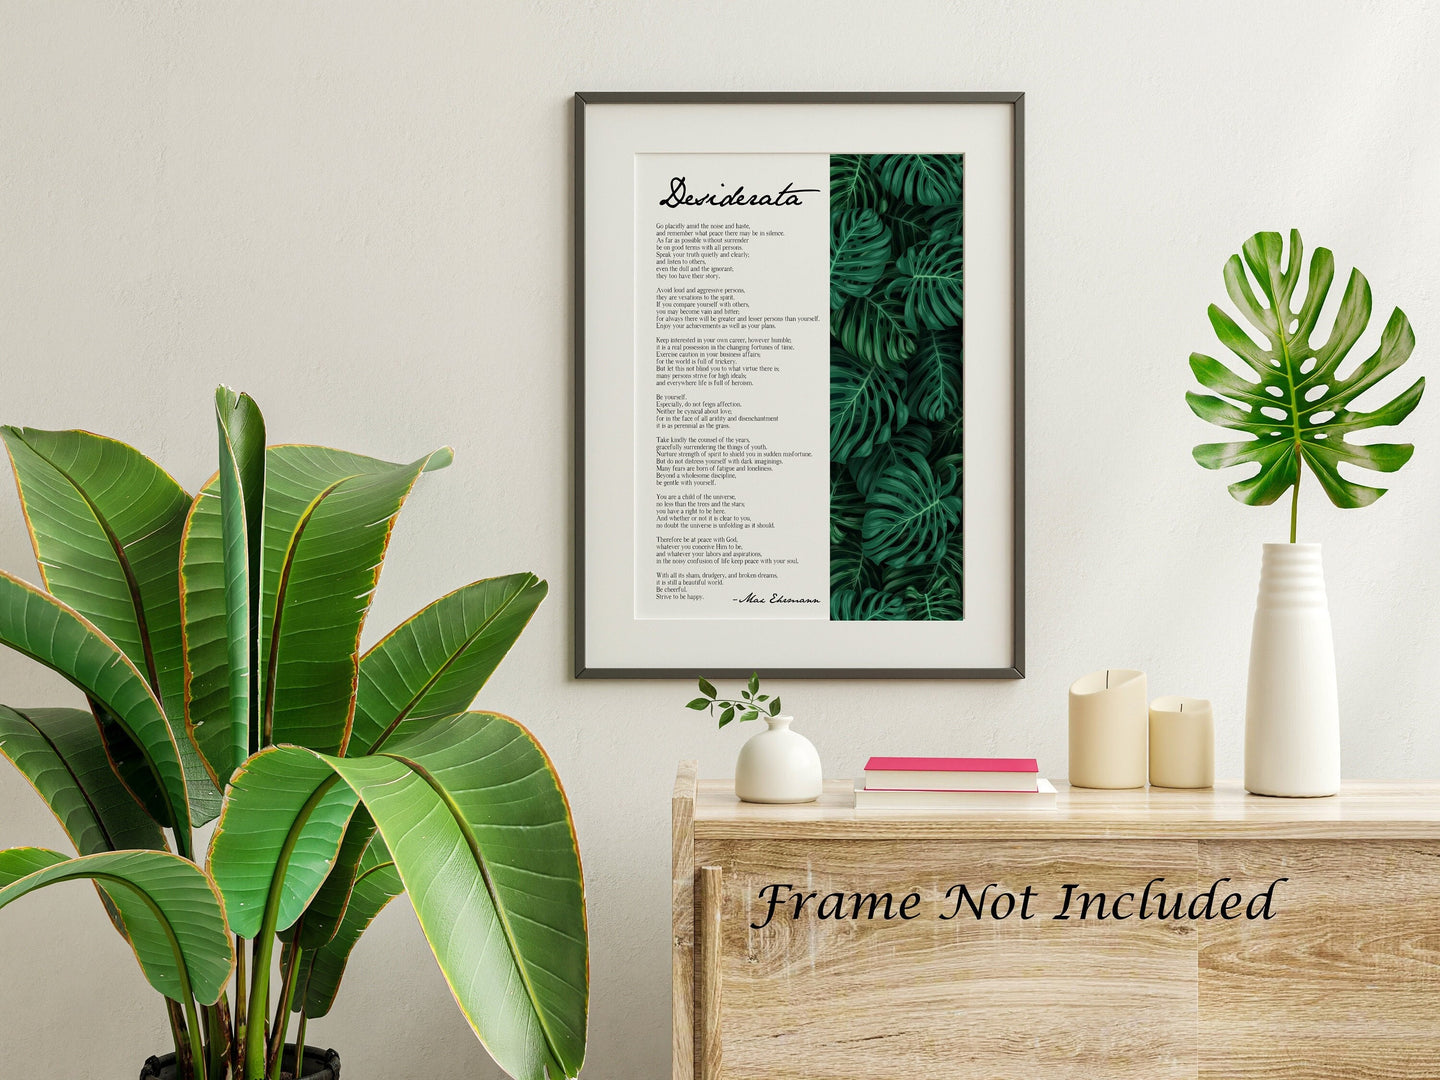 Desiderata Poem Print - Poem By Max Ehrmann - Tropical Plant Monstera Decor - Framed print or Unframed print